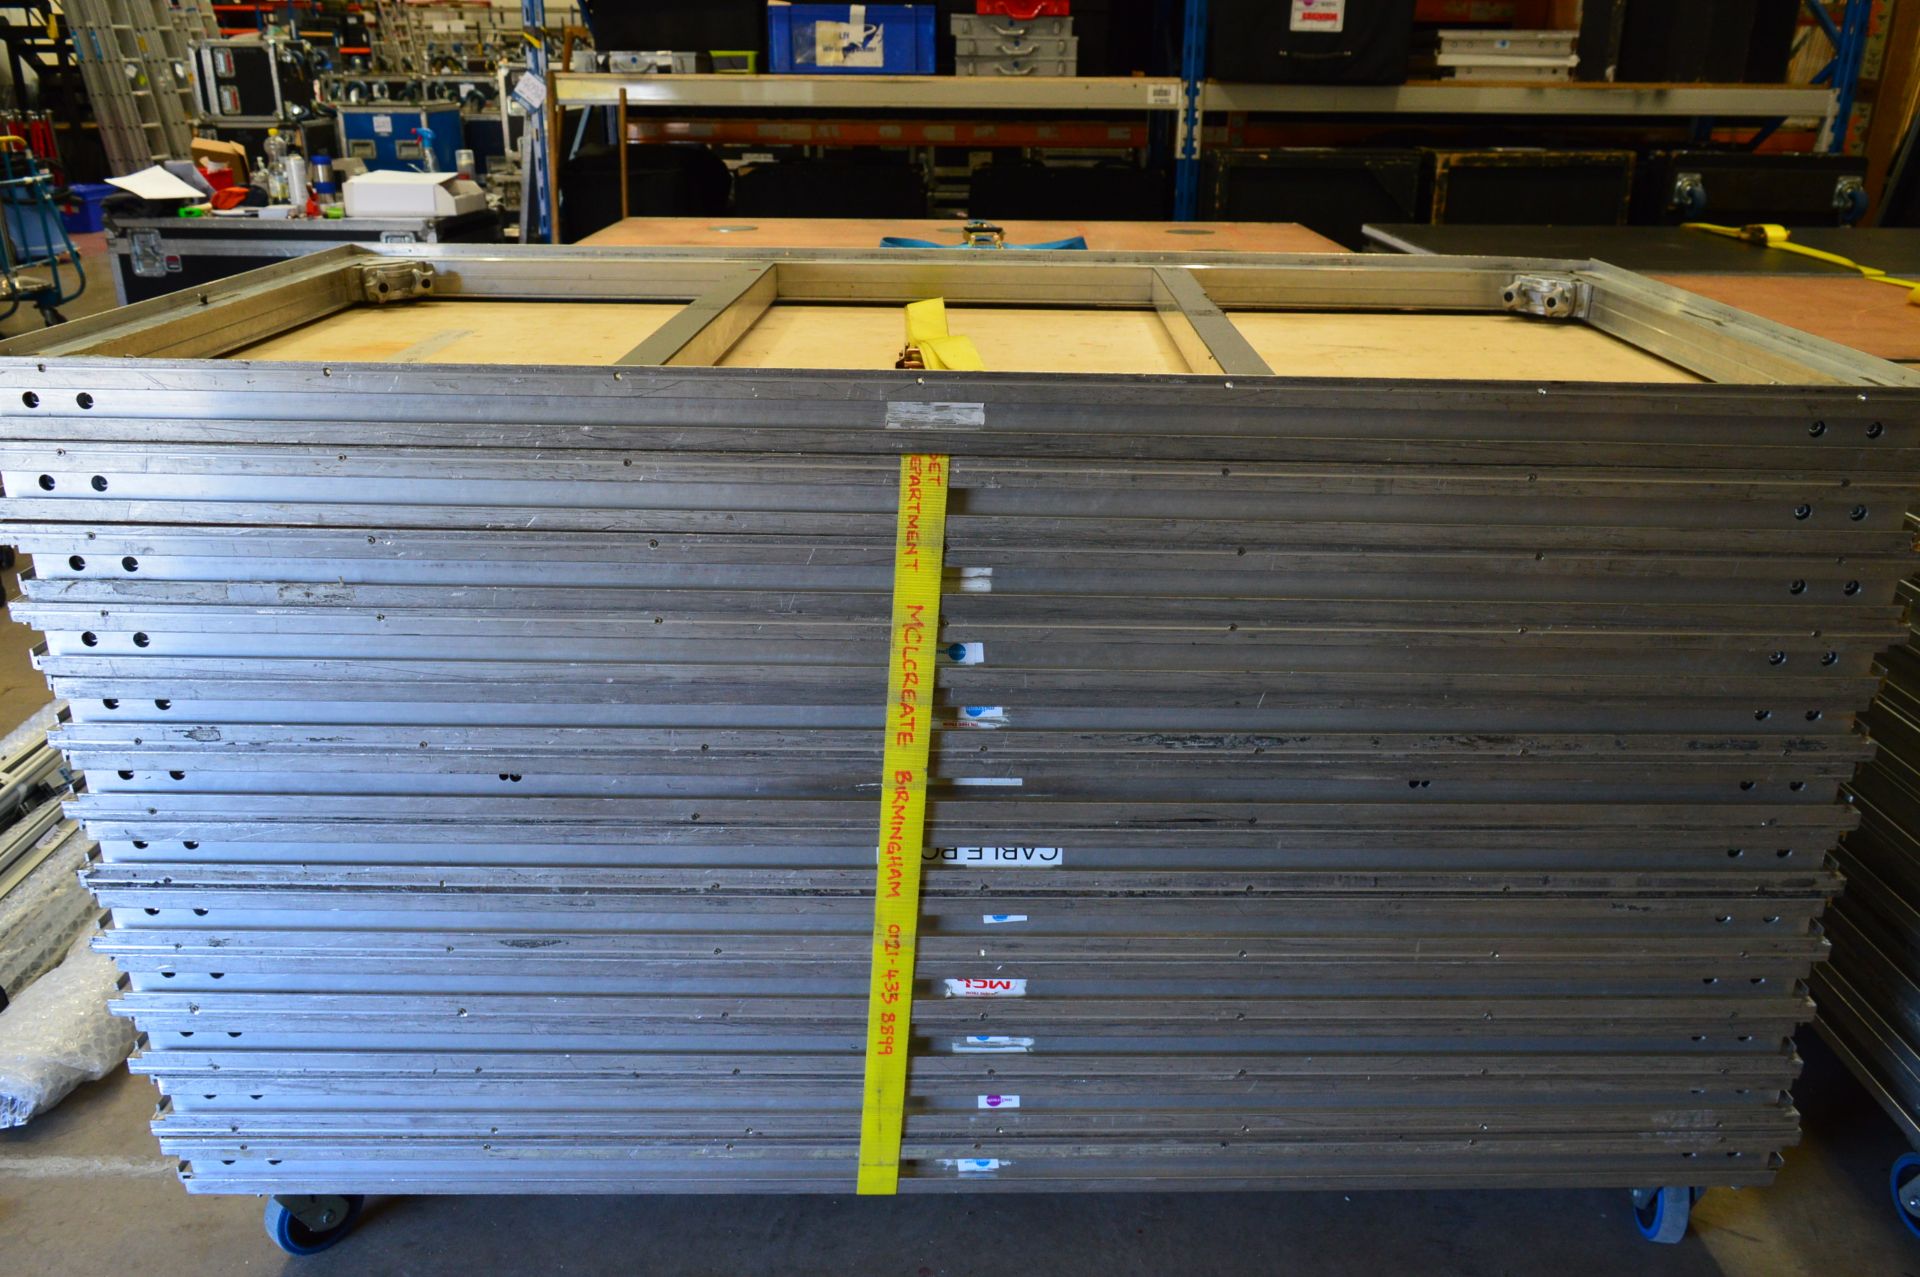 11x No. aluminium/plywood rectangular stage deck s - Image 2 of 2